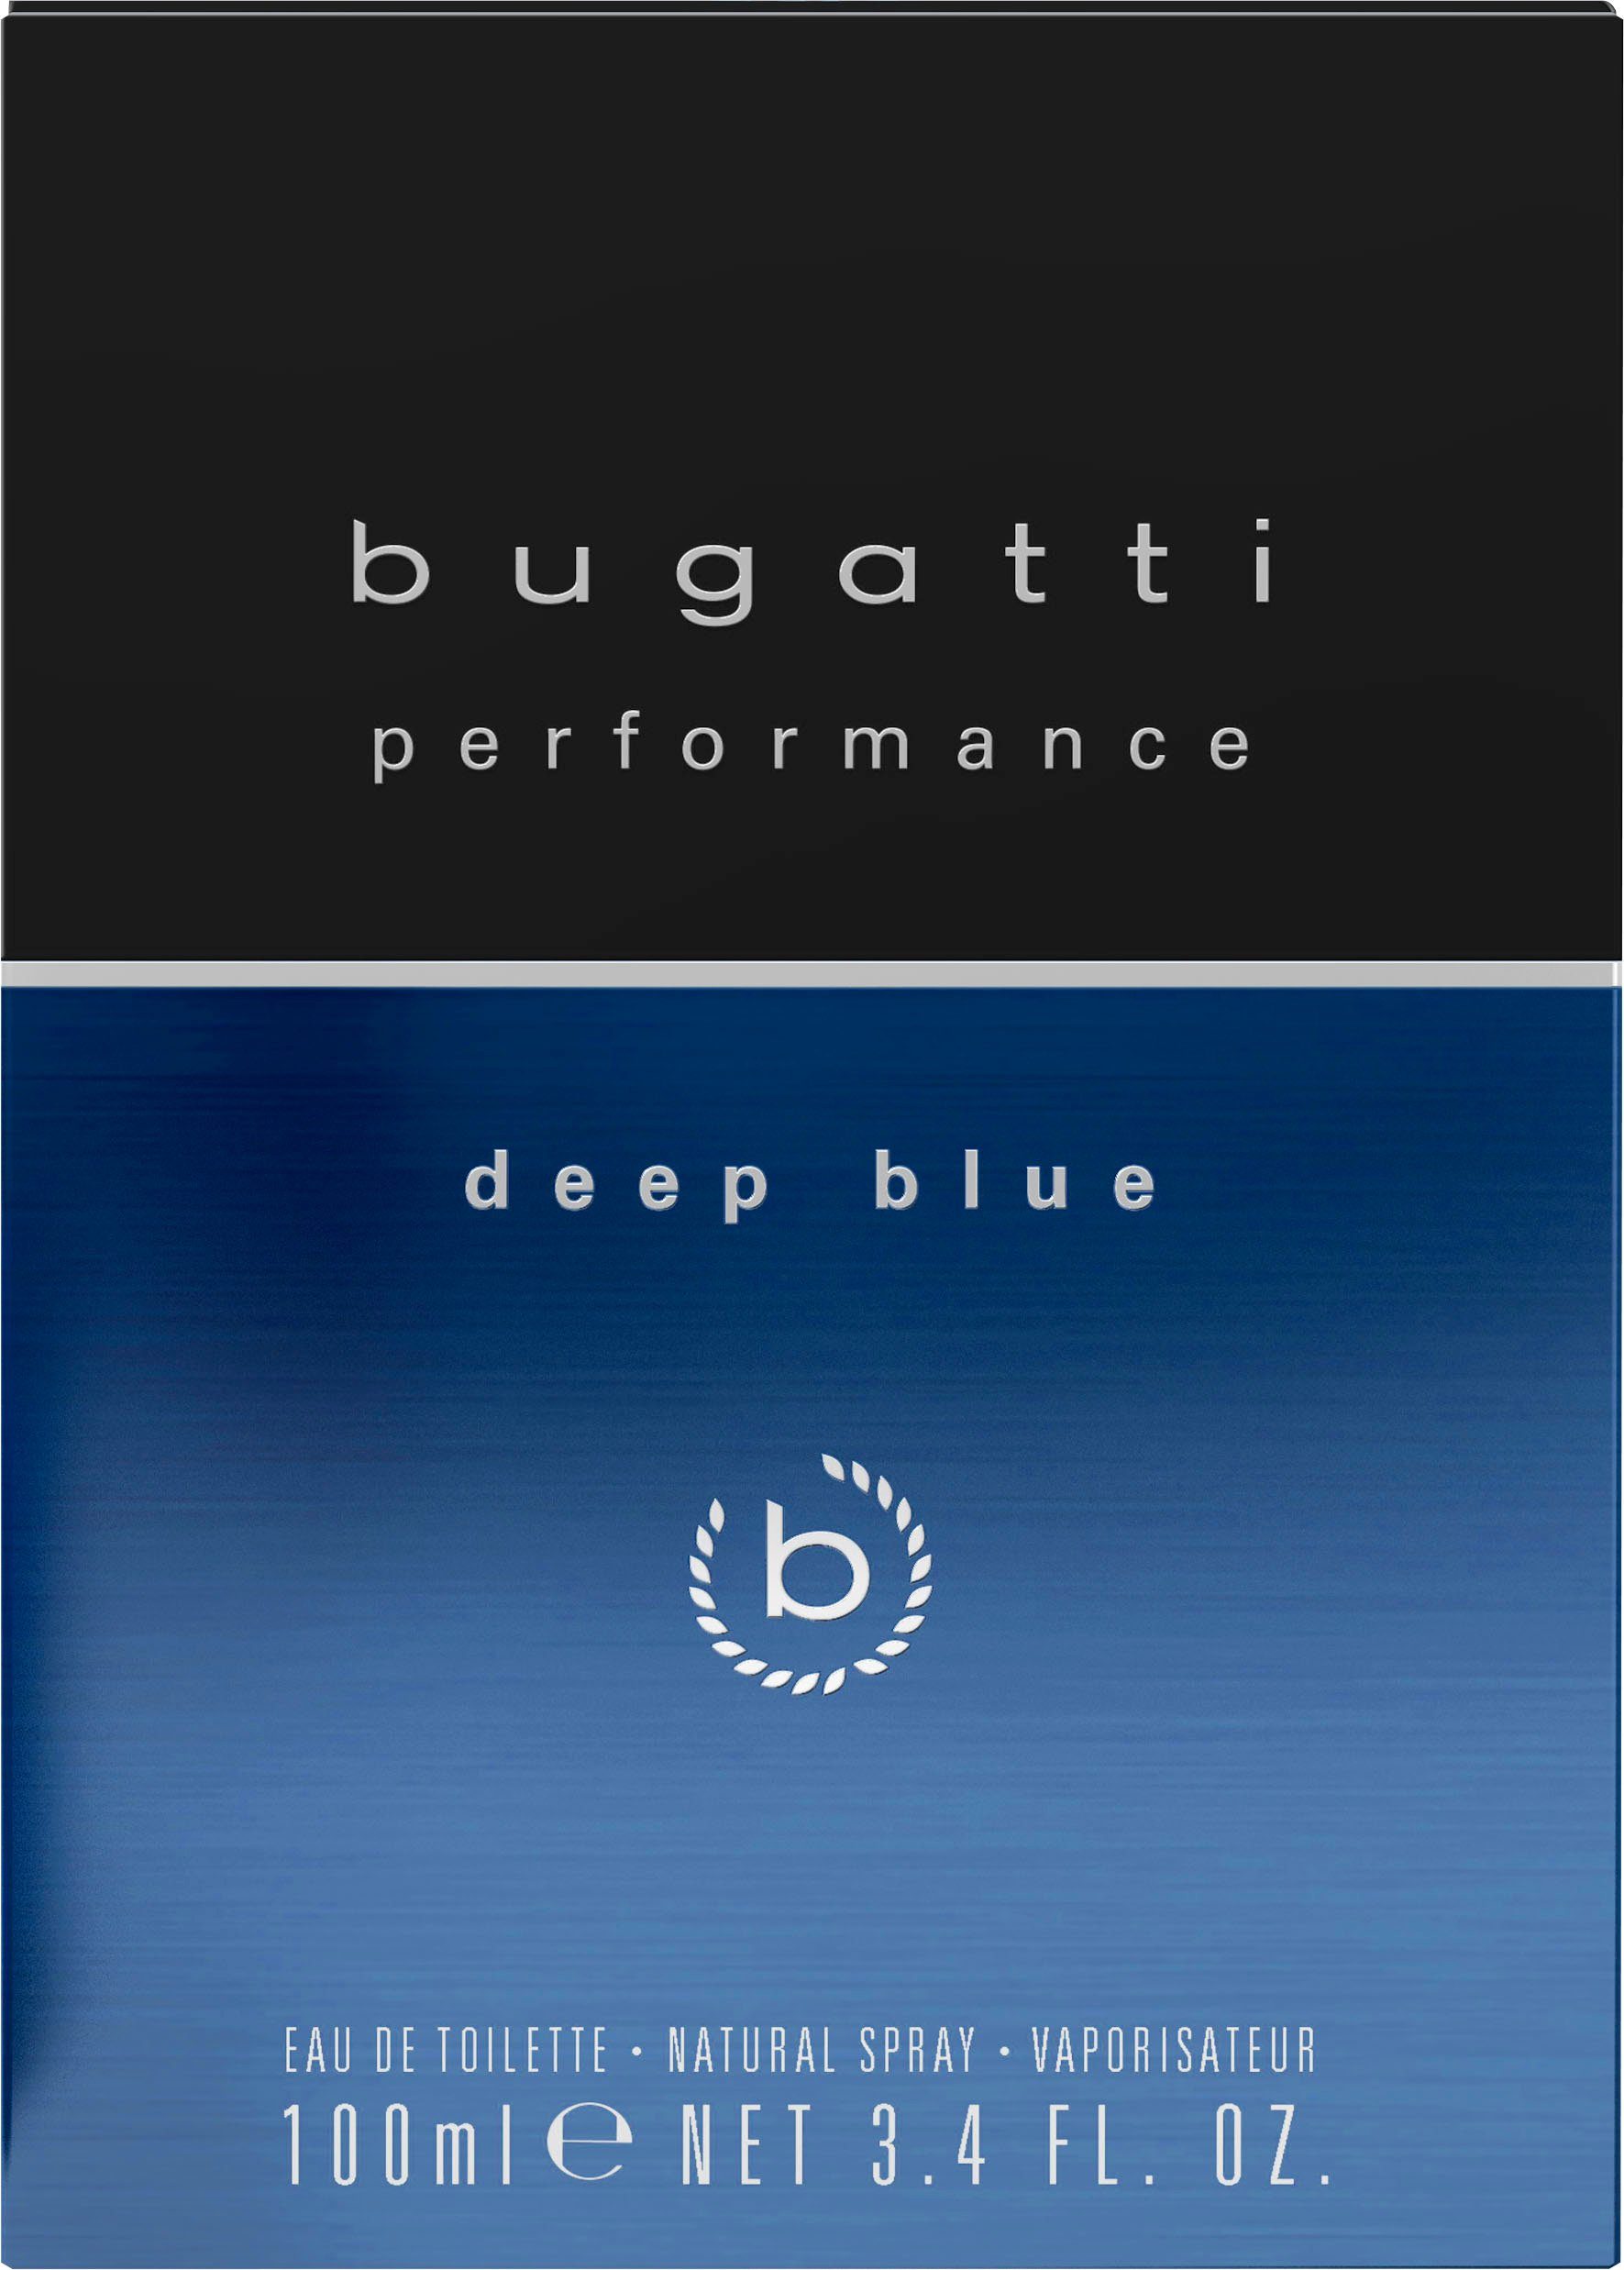 Blue de Eau BUGATTI EdT 100ml Toilette Performance Deep bugatti